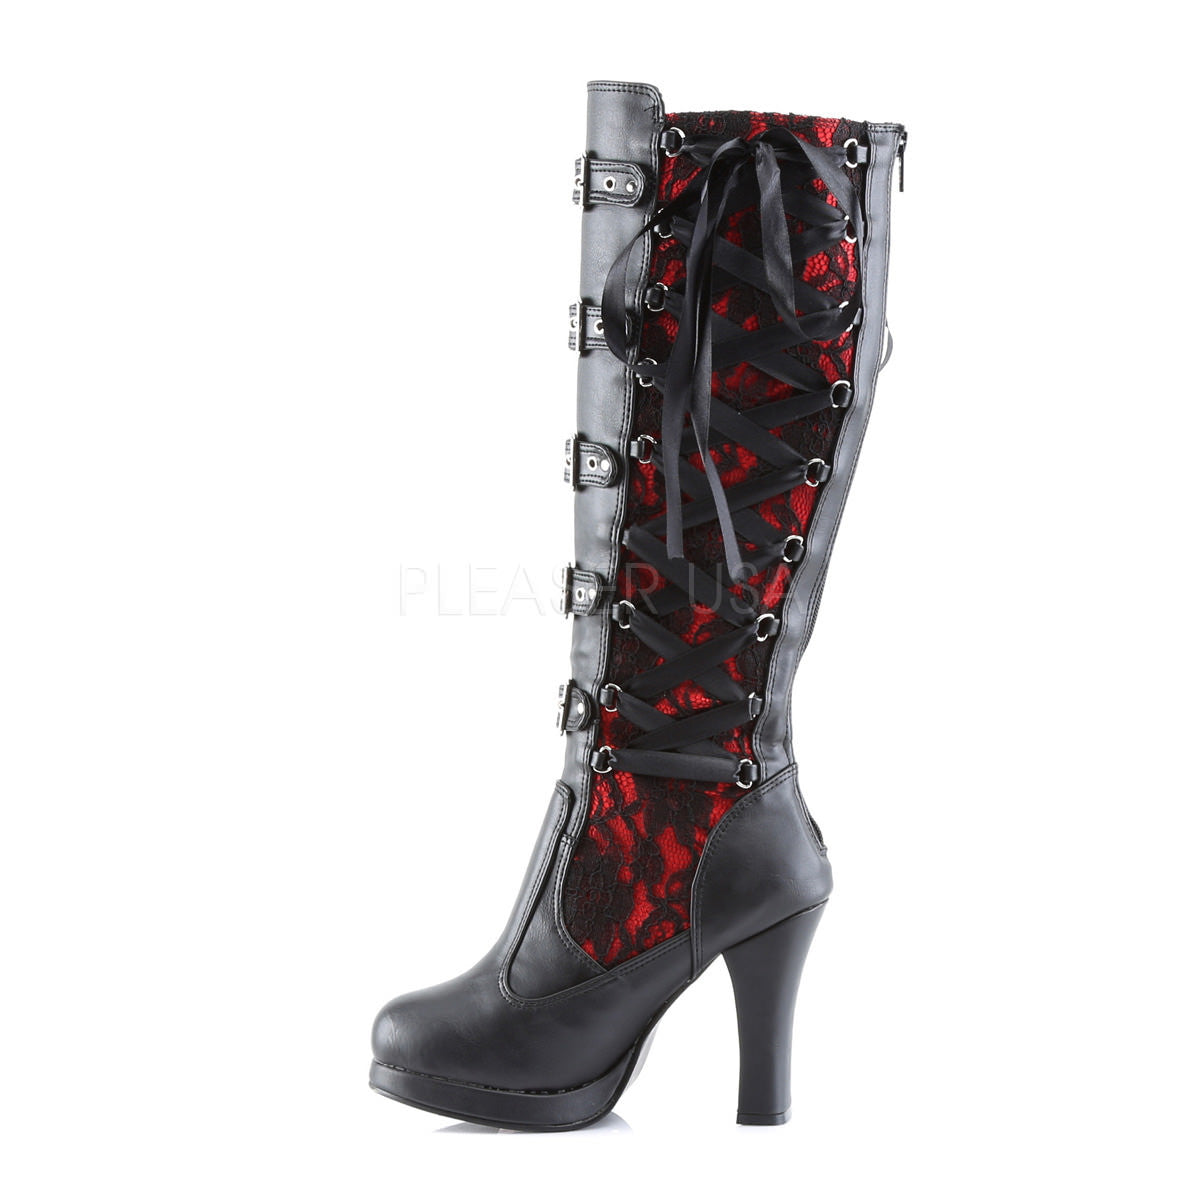 Demonia,DEMONIA CRYPTO-106 Black-Red Pu Vegan Boots - Shoecup.com